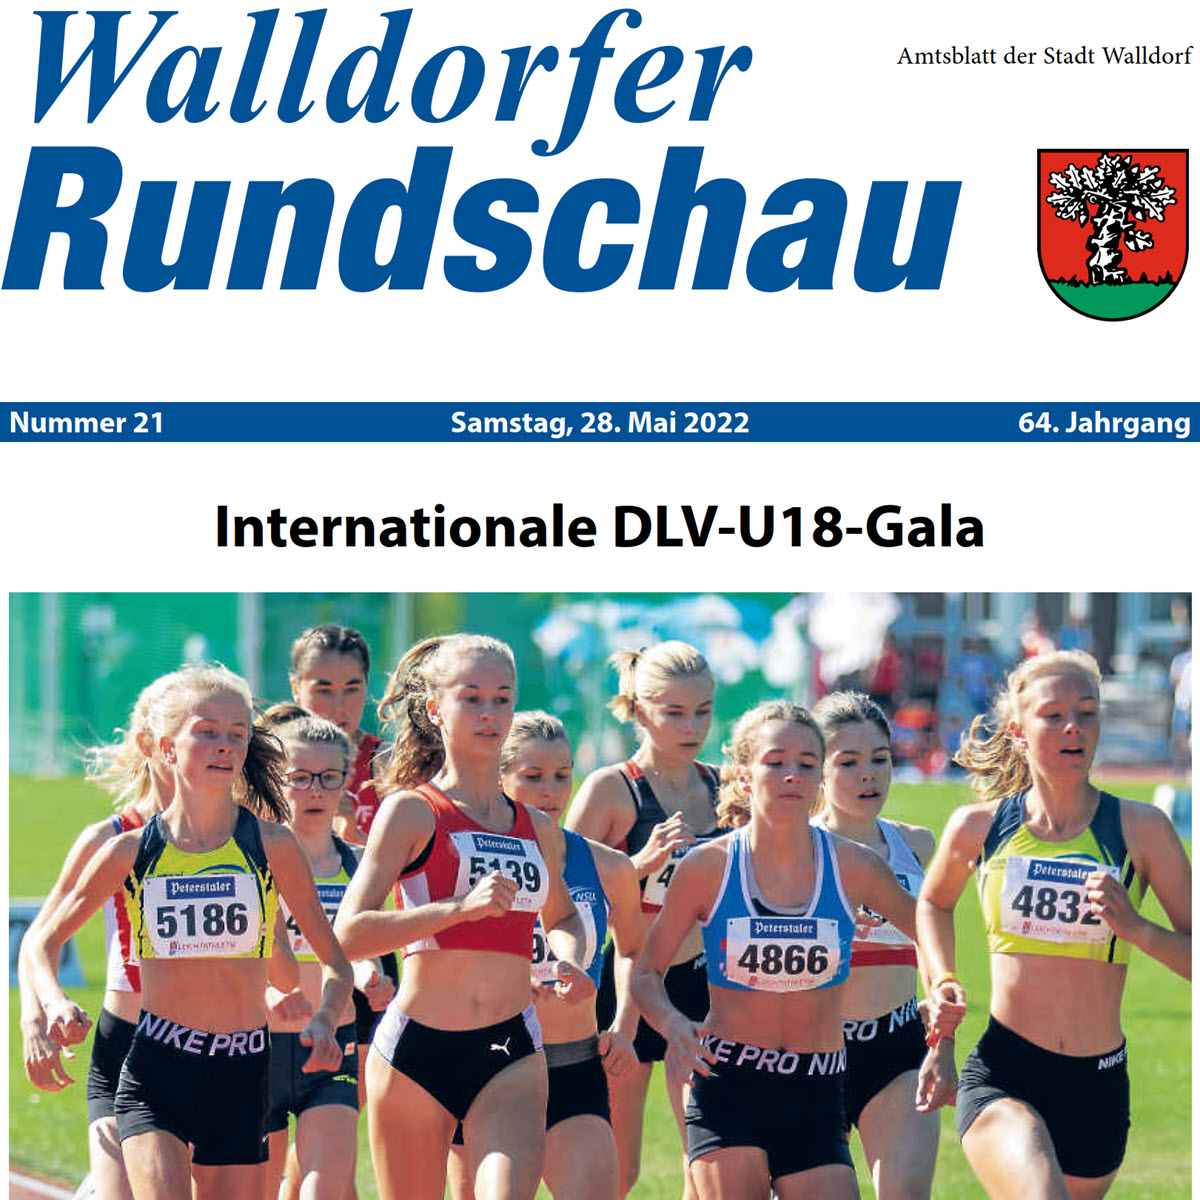 Die Walldorfer Rundschau 2022 Nr. 21